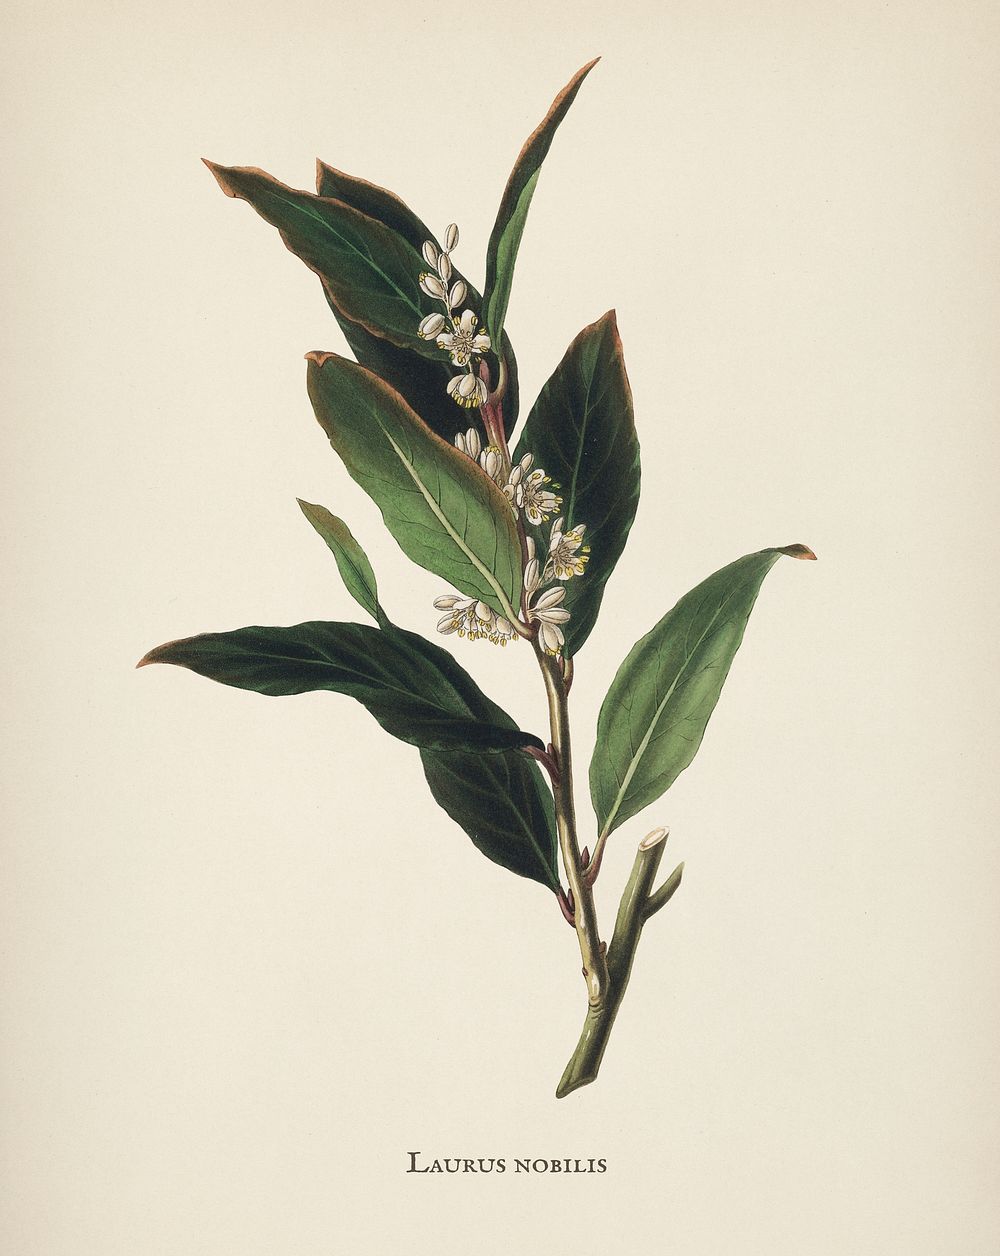 Bay laurel (Laurus nobilis) illustration from Medical Botany (1836) by John Stephenson and James Morss Churchill.